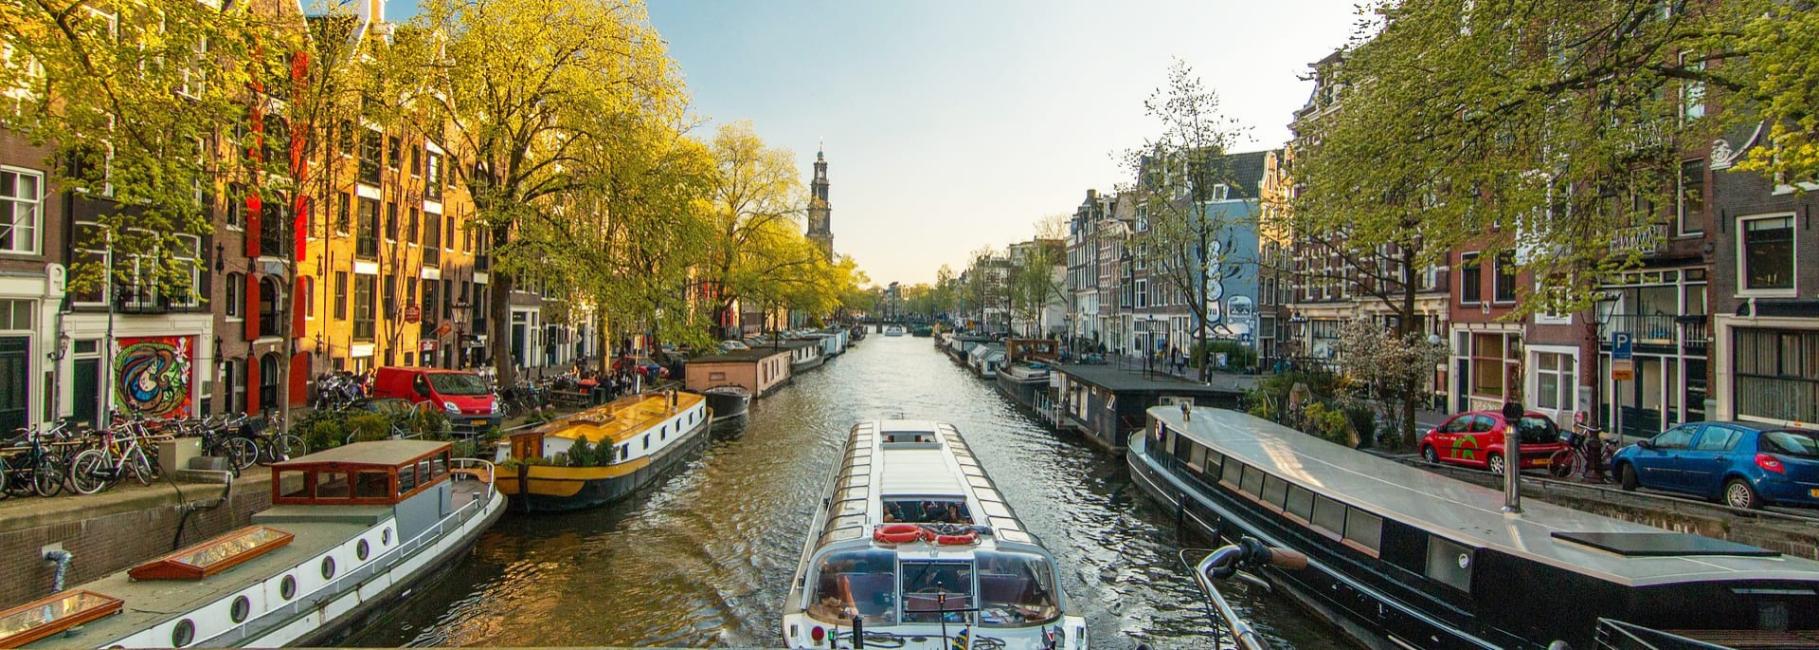 amsterdam travel trip header slk fe